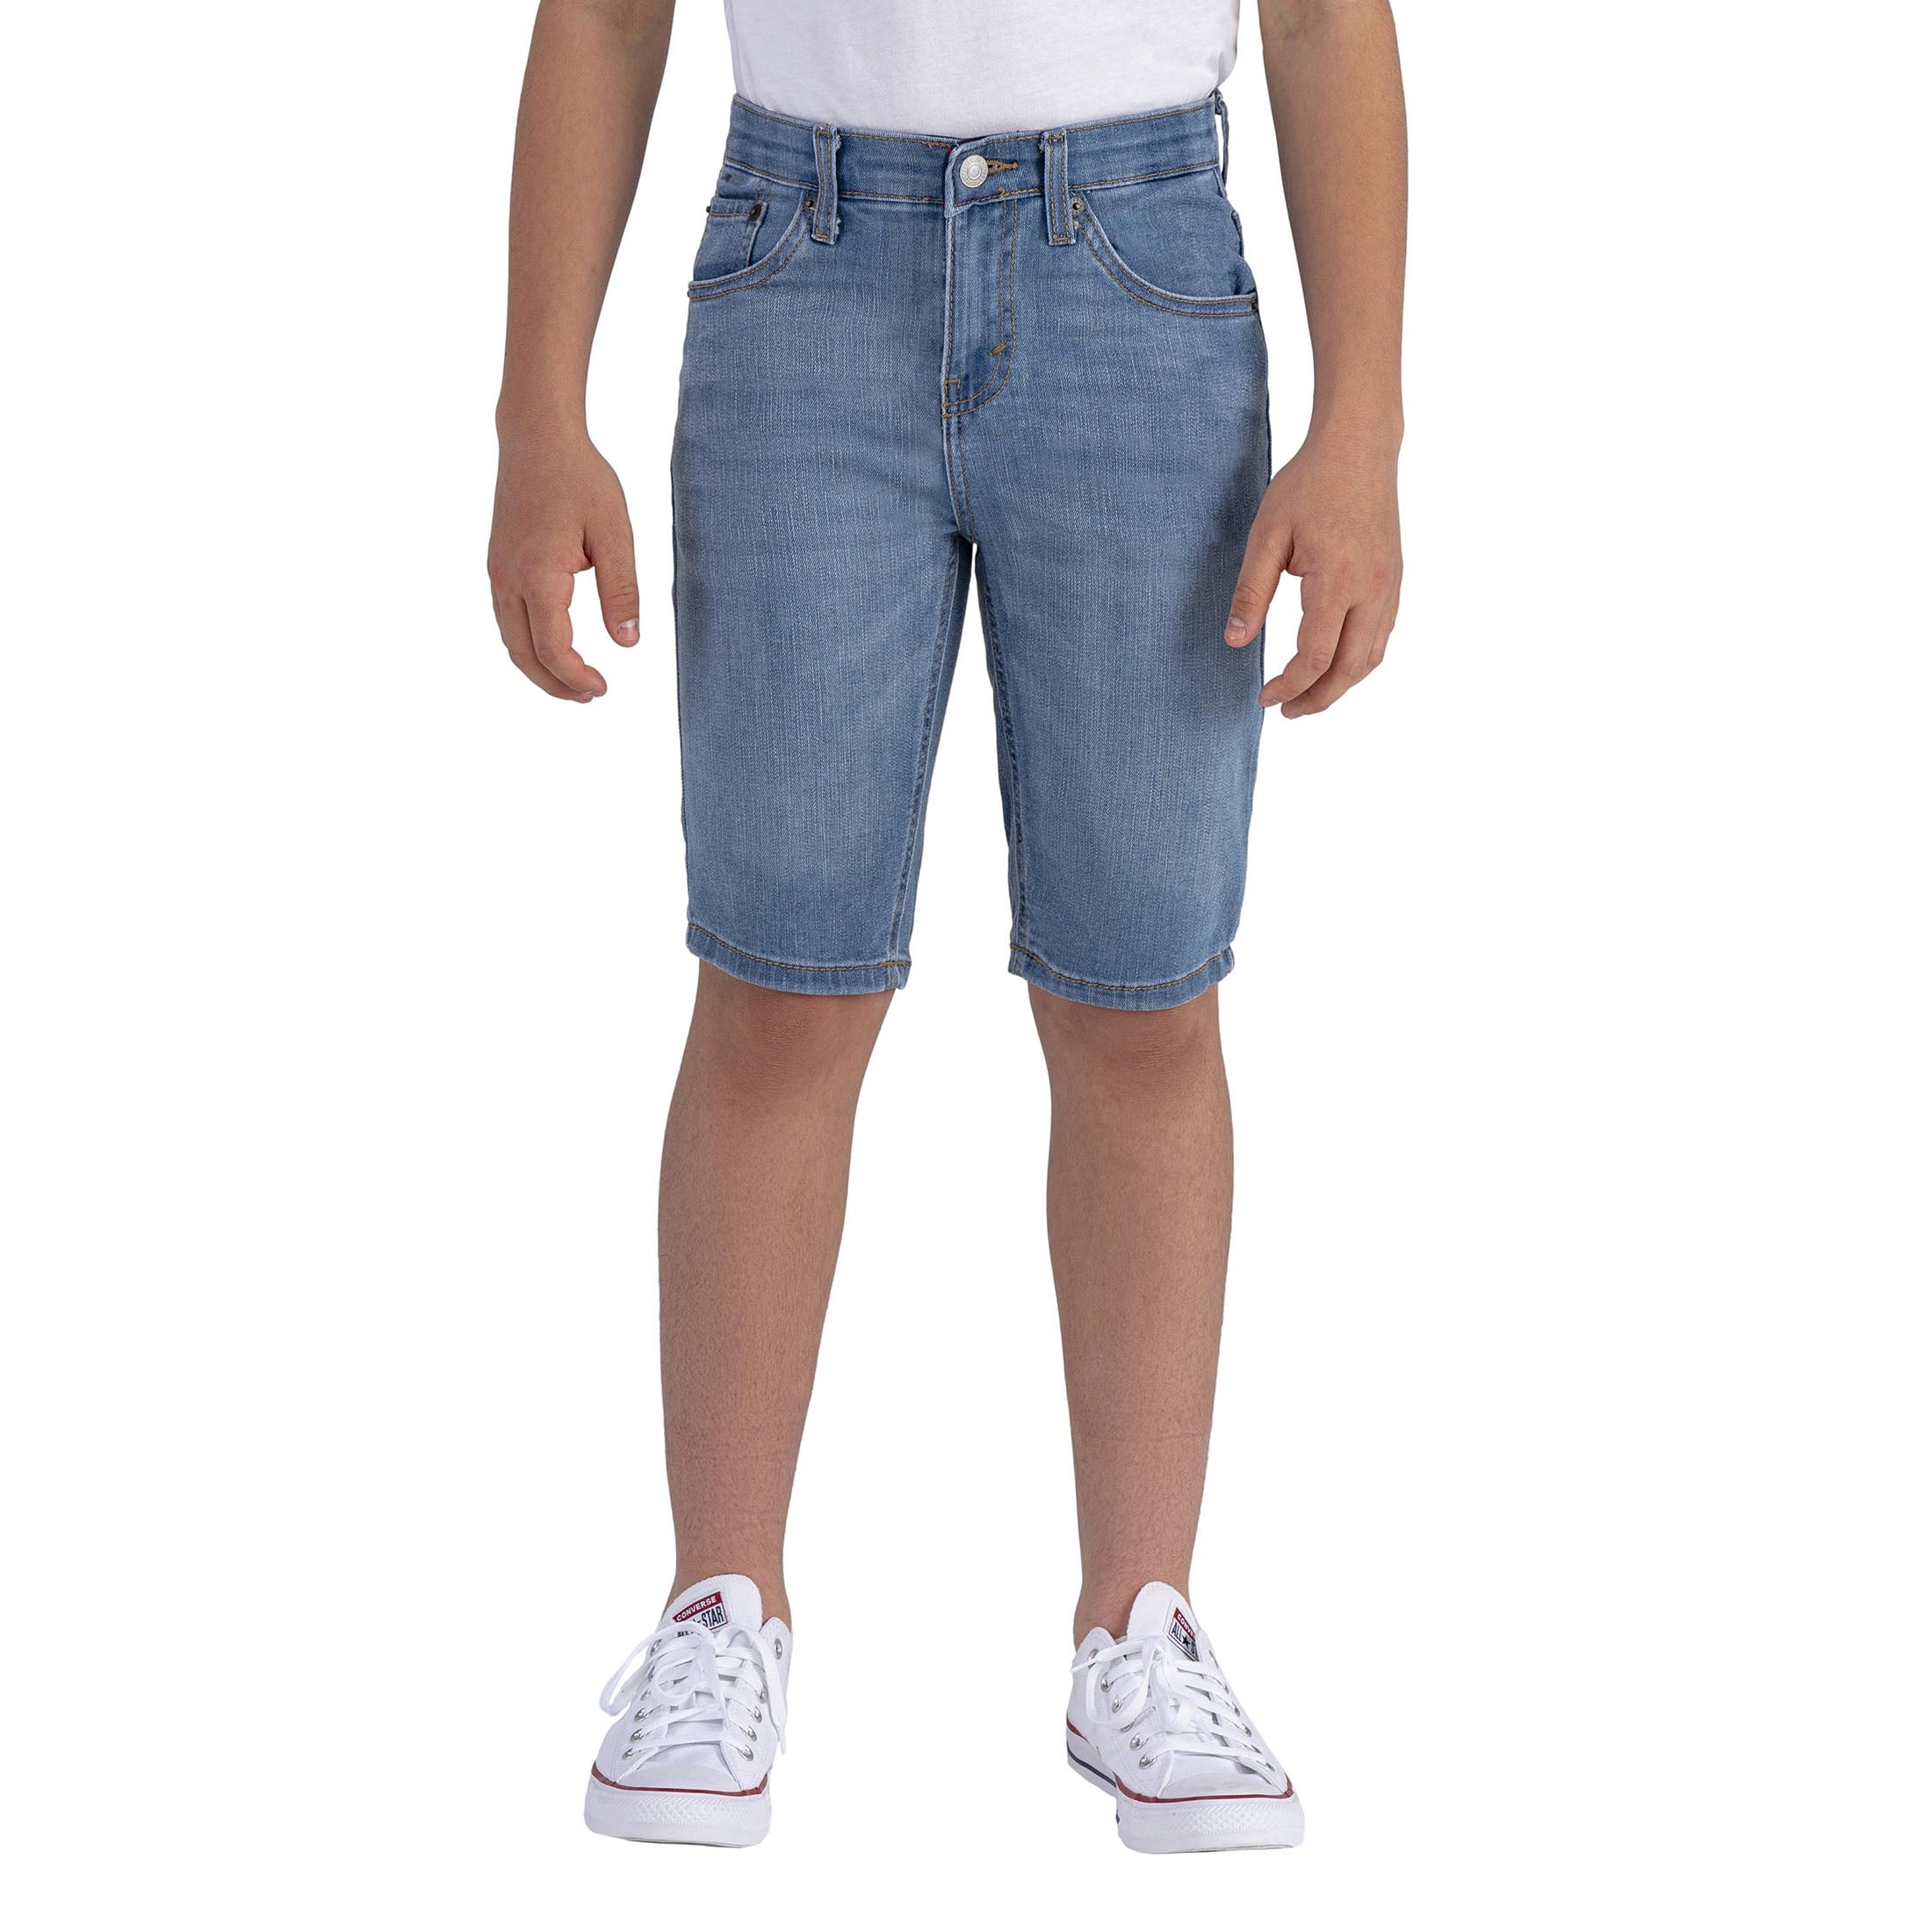 NEW Levi's 511 Slim gray khaki chino jeans 5 pocket shorts boys sz  2T 